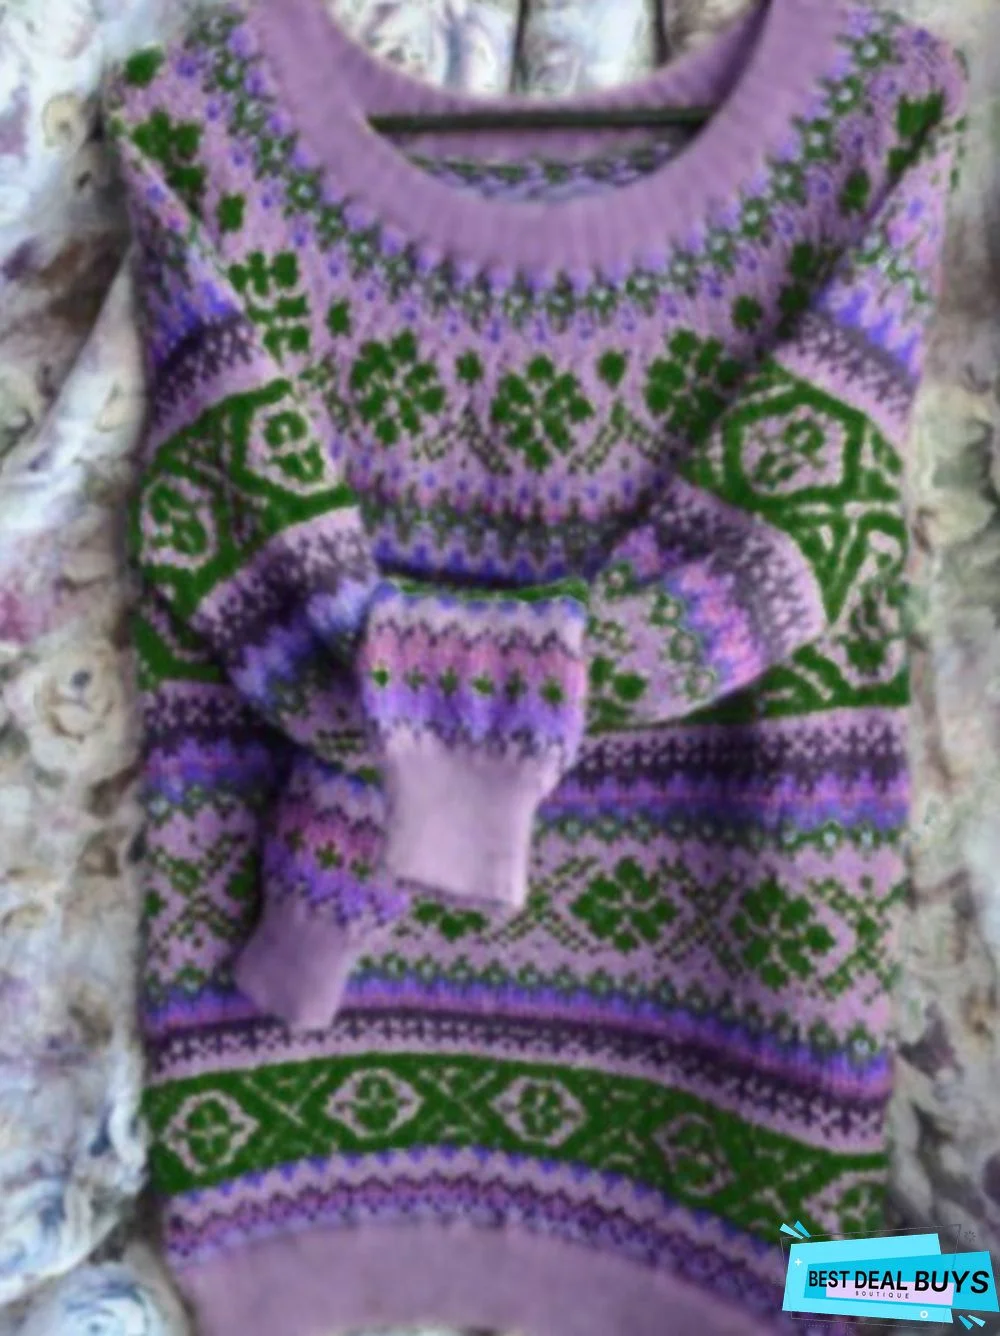 Knitted Cotton Boho Tribal T-shirt